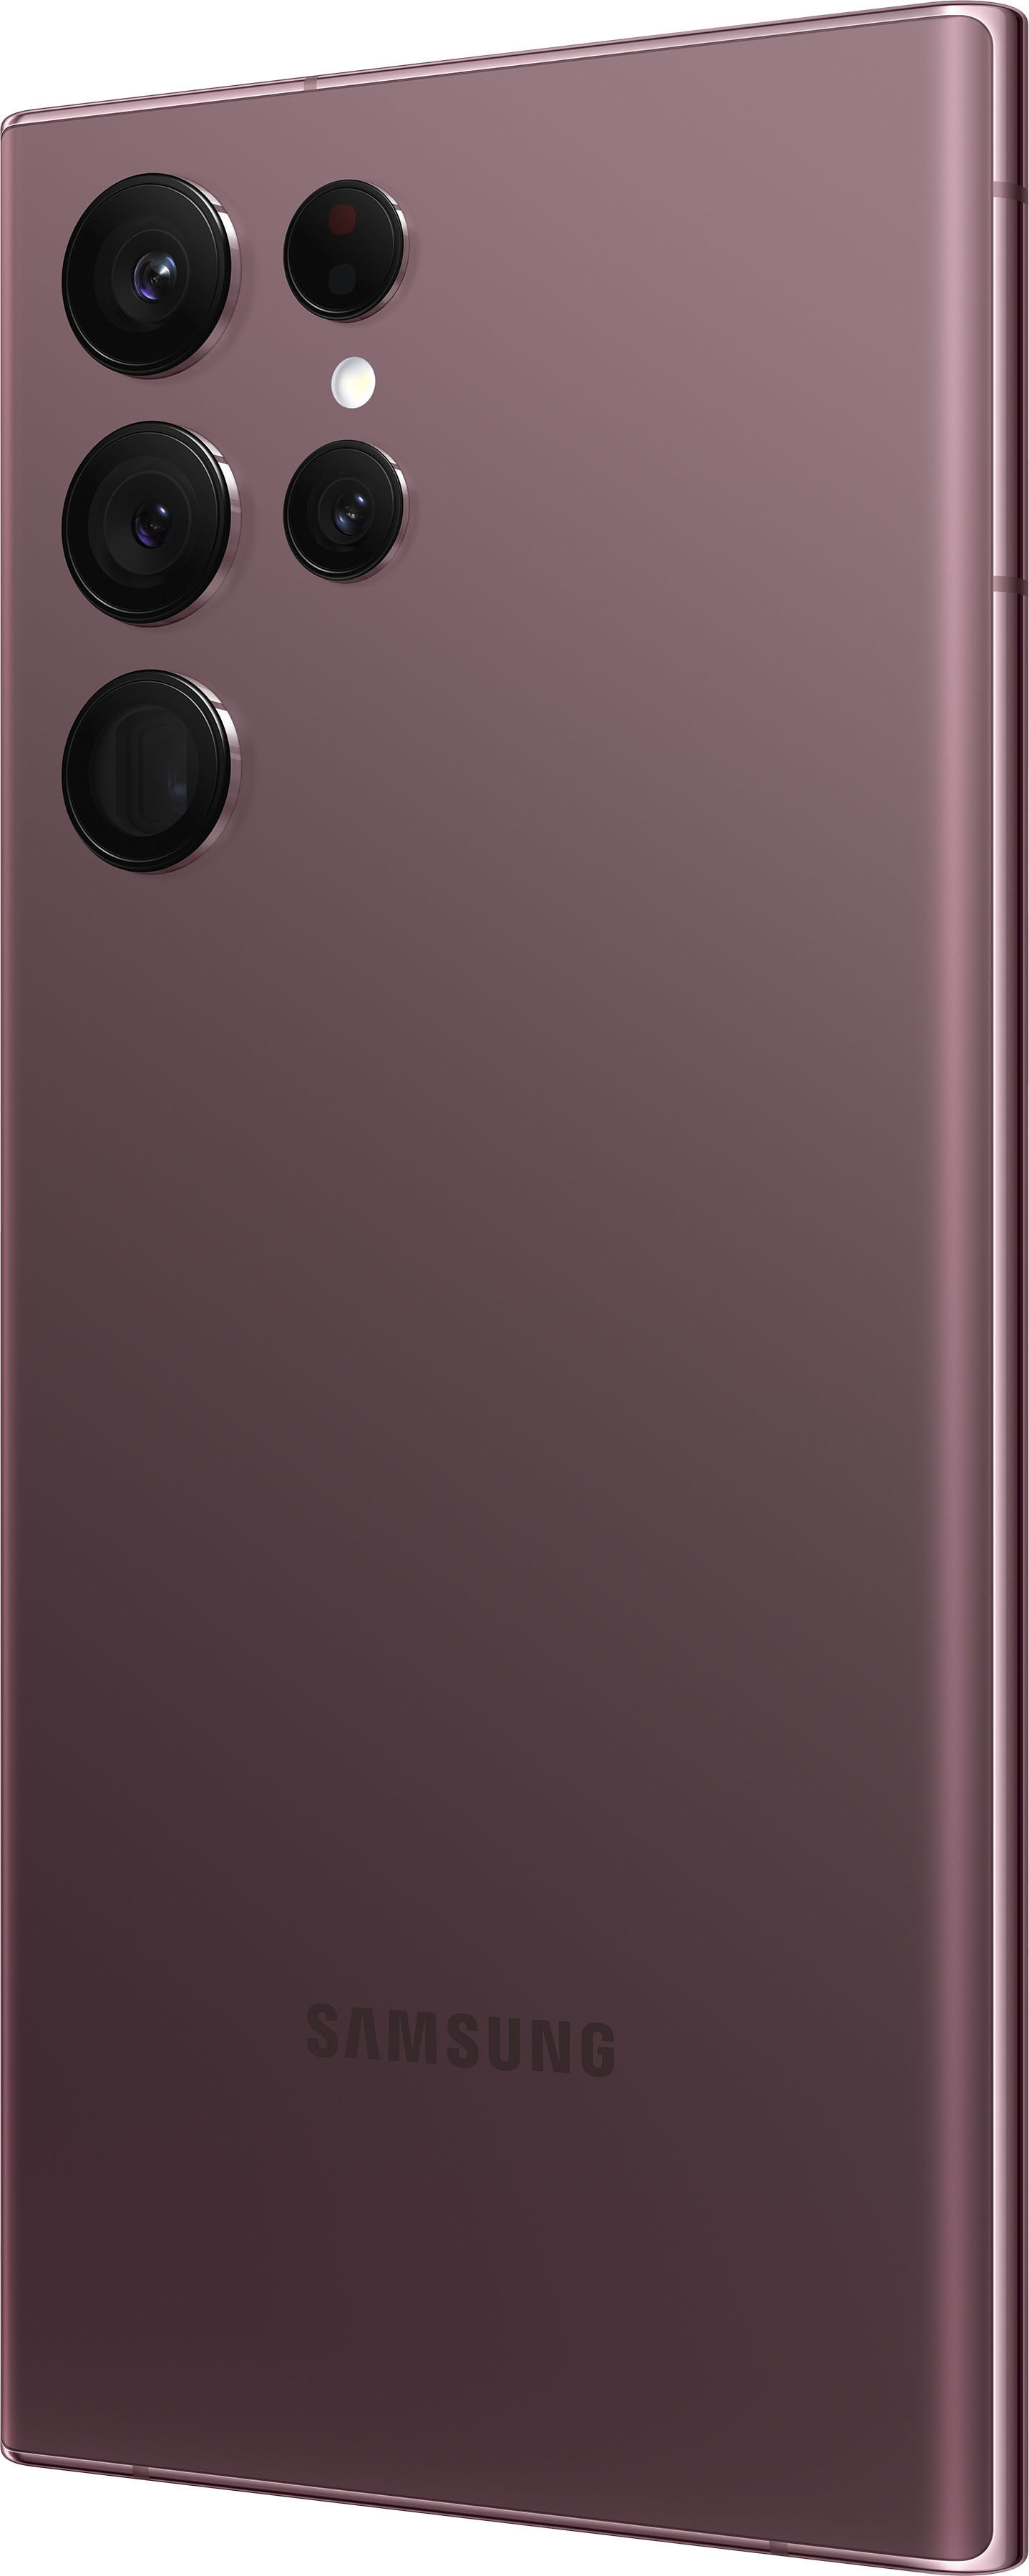 Samsung Galaxy S22 Ultra 5G Sm-s908u1 128GB Black (US Model) - Factory Unlocked Cell Phone - Very Good Condition